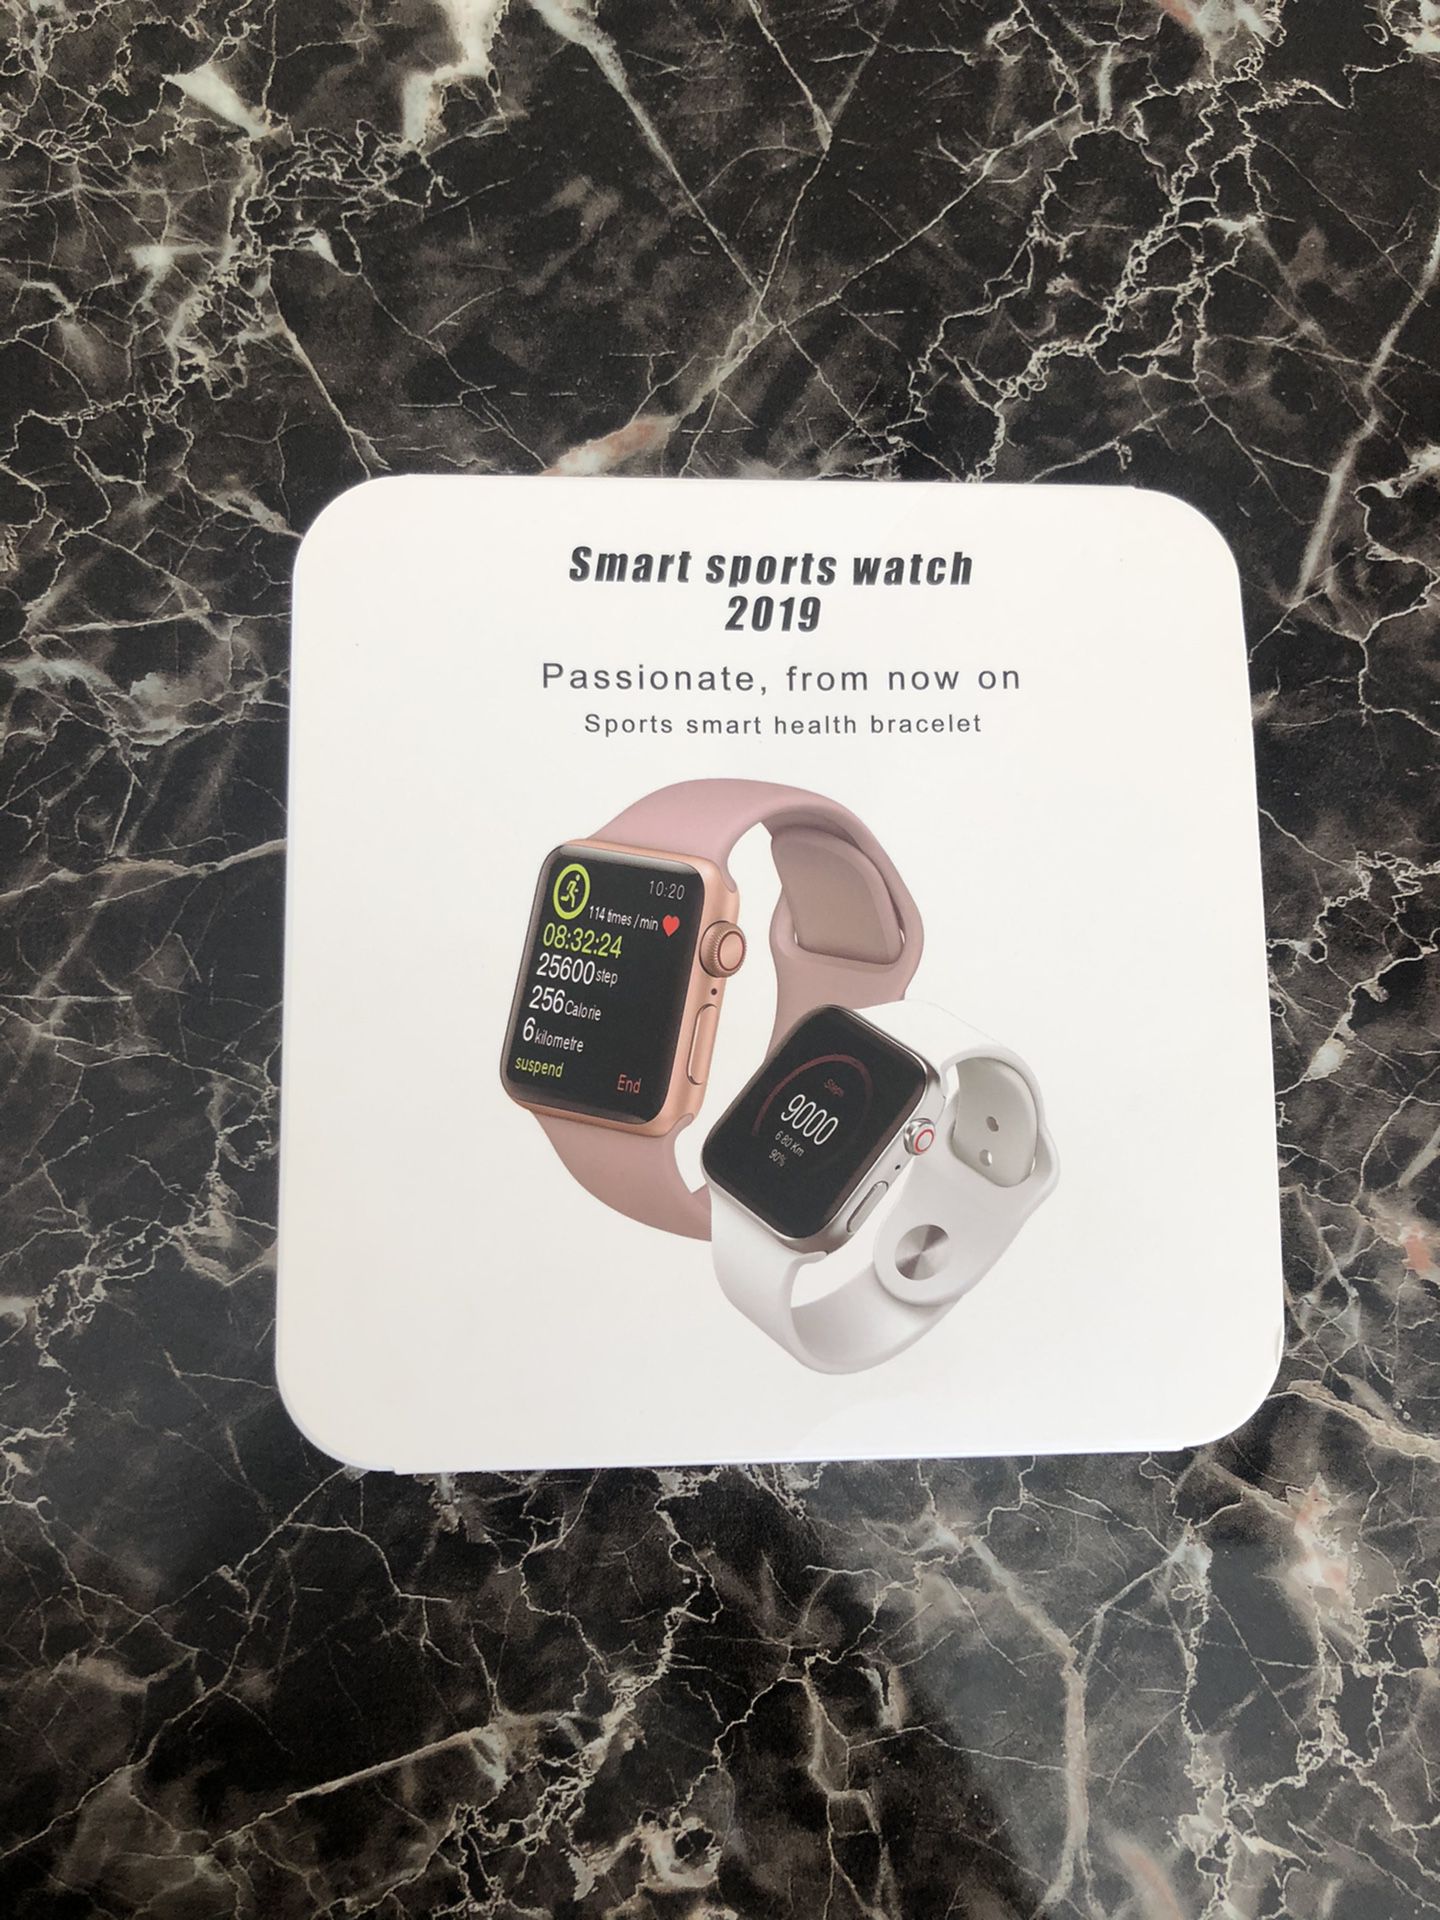 Smart watches